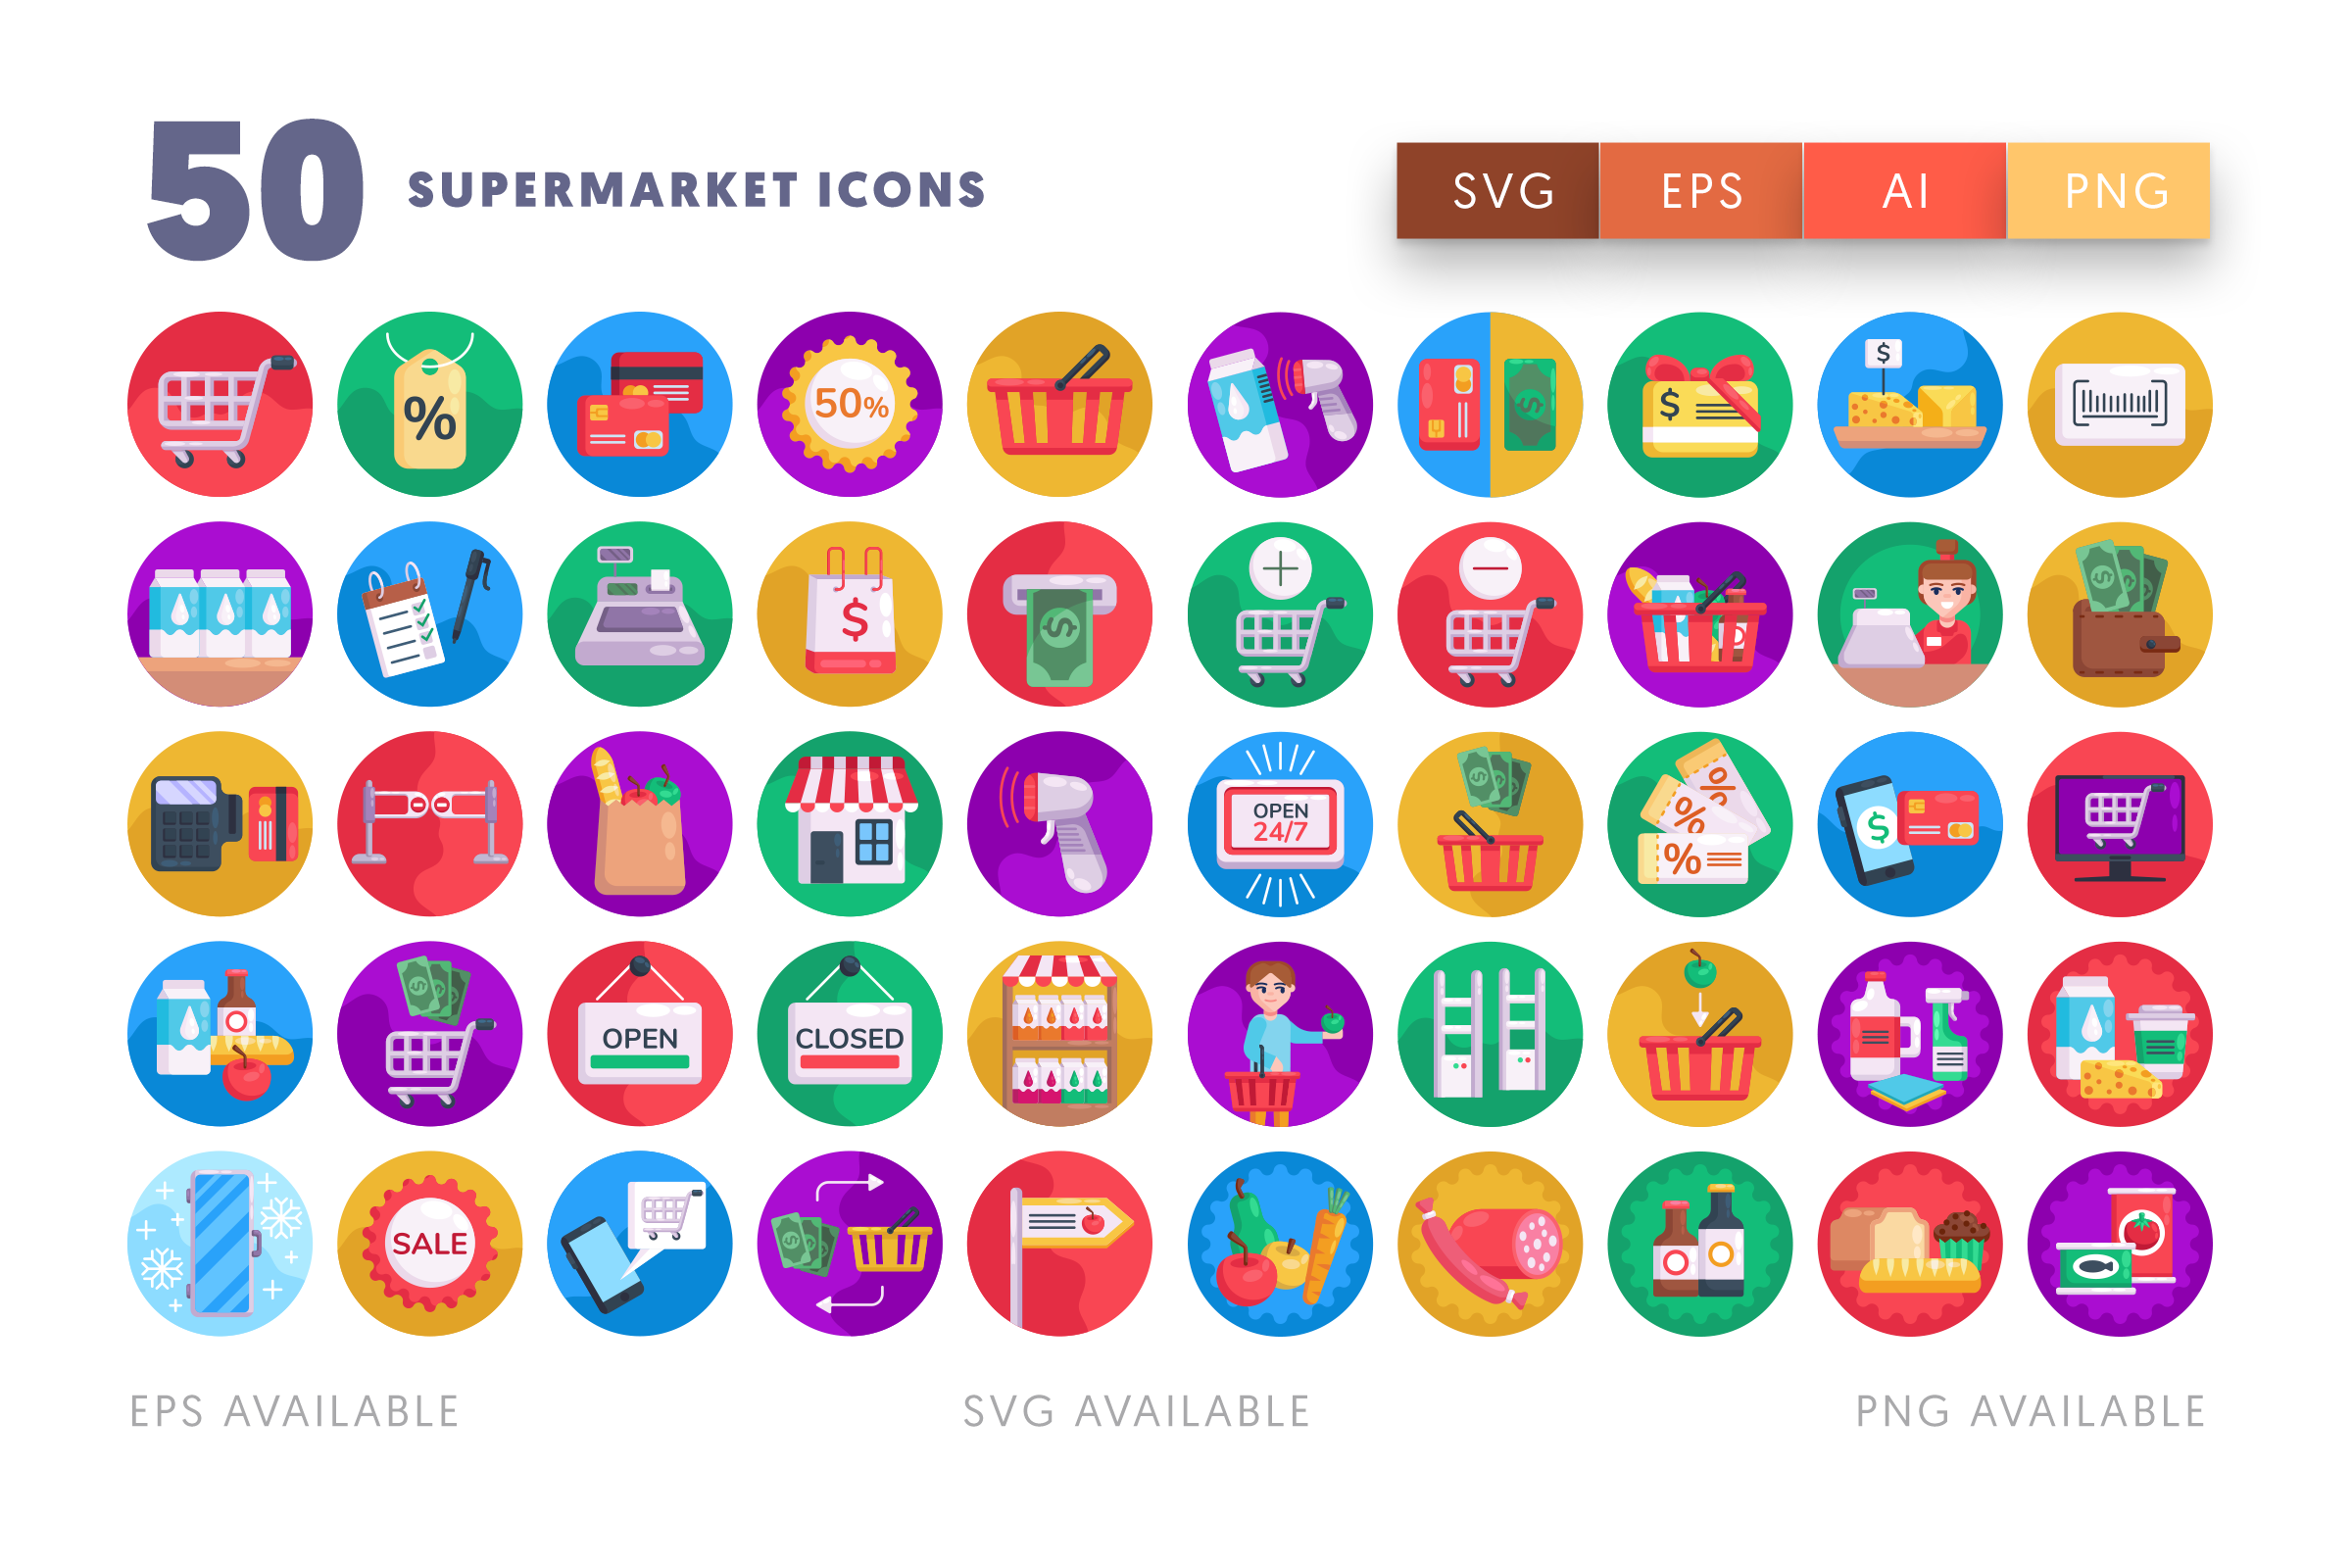 Supermarket icons png/svg/eps